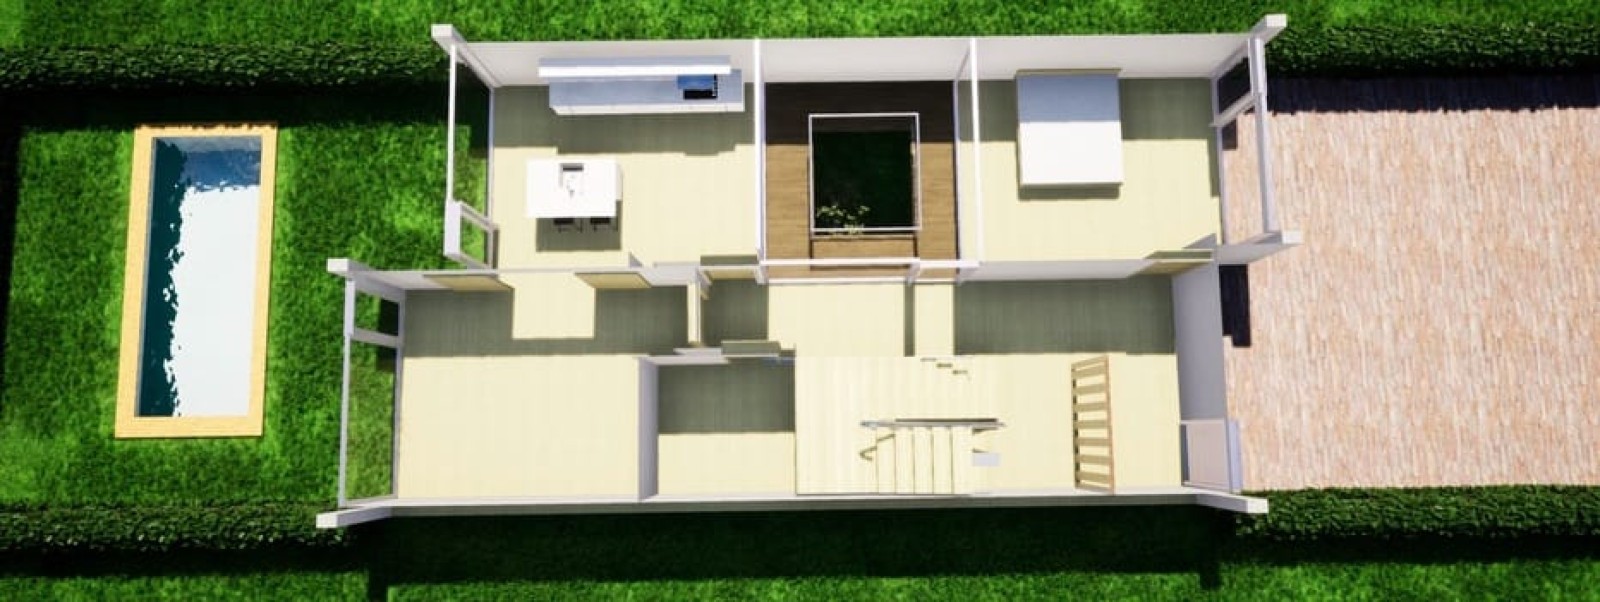 4 bedroom villa, new construction with seaview, for sale in Tavira, Algarve_229498